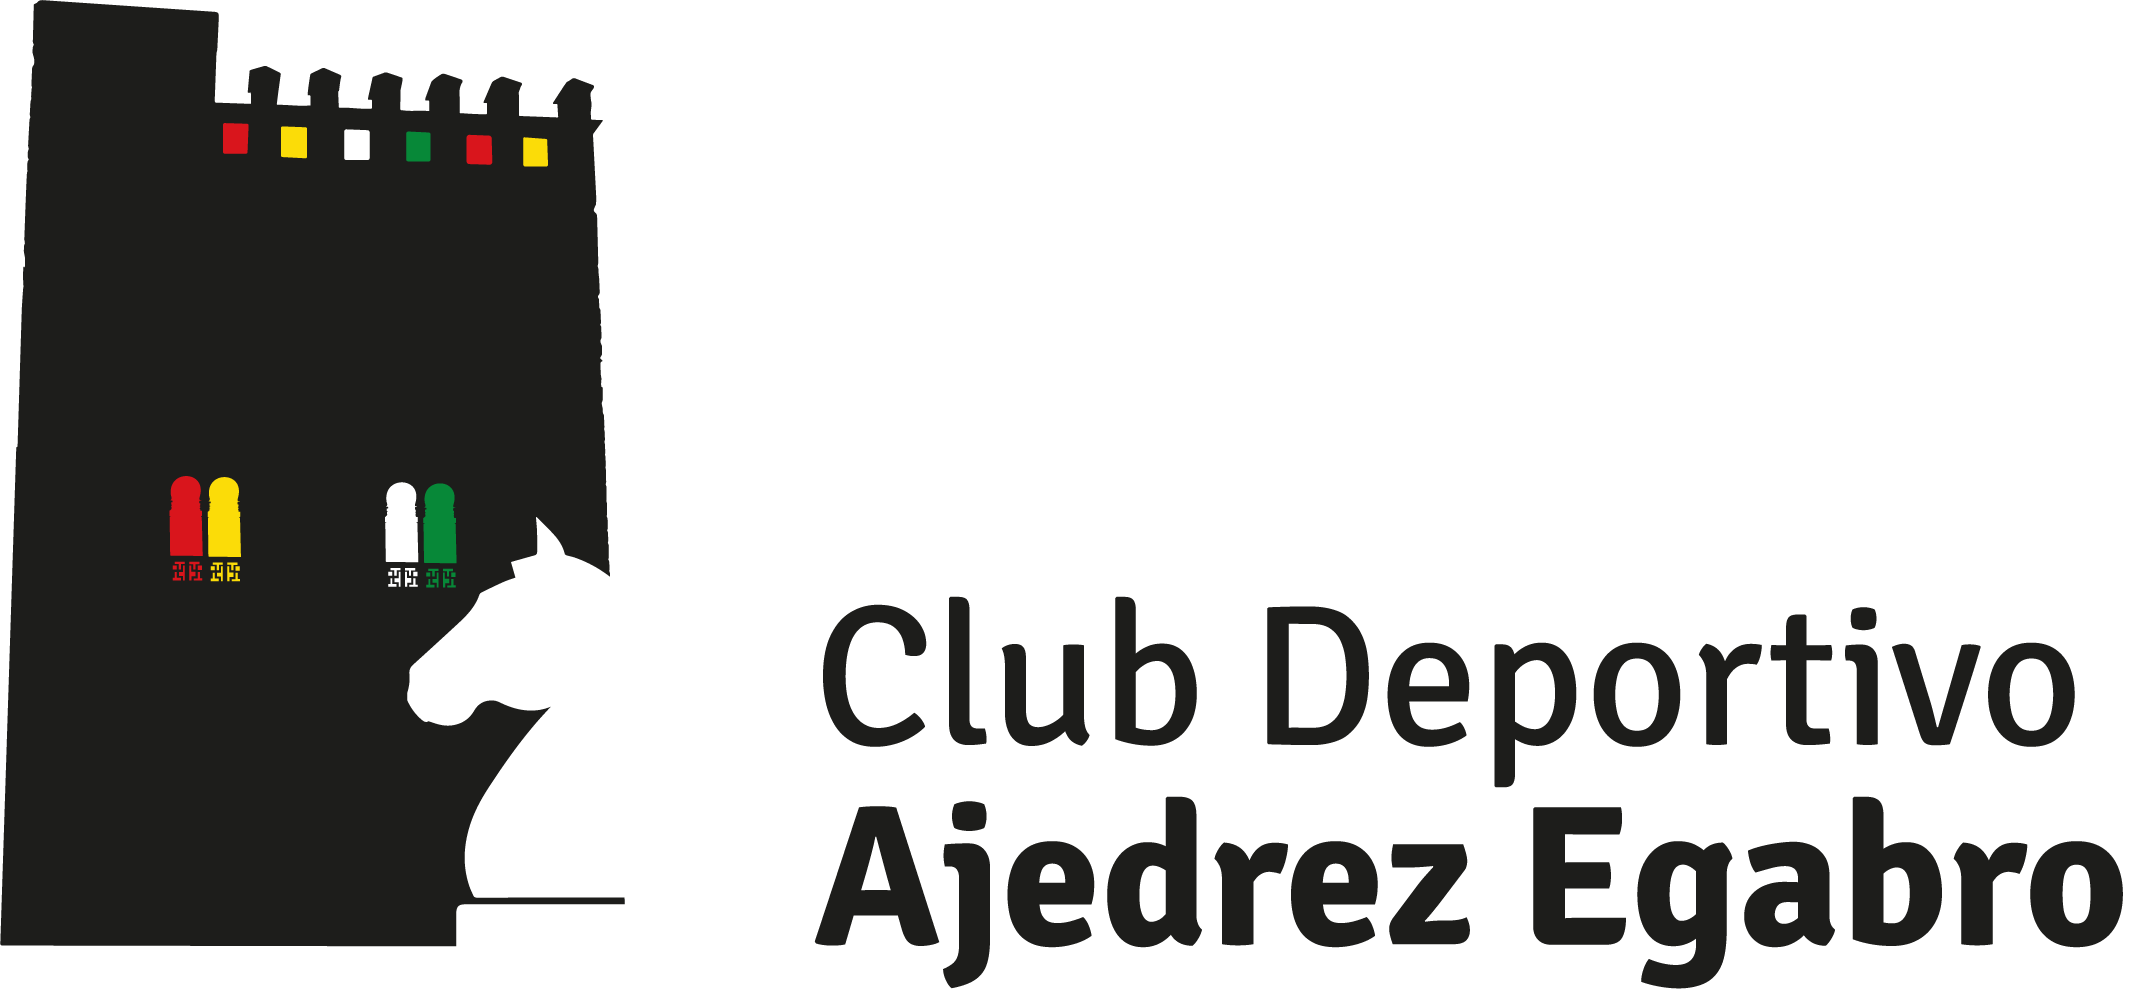 Club Deportivo Ajedrez Egabro